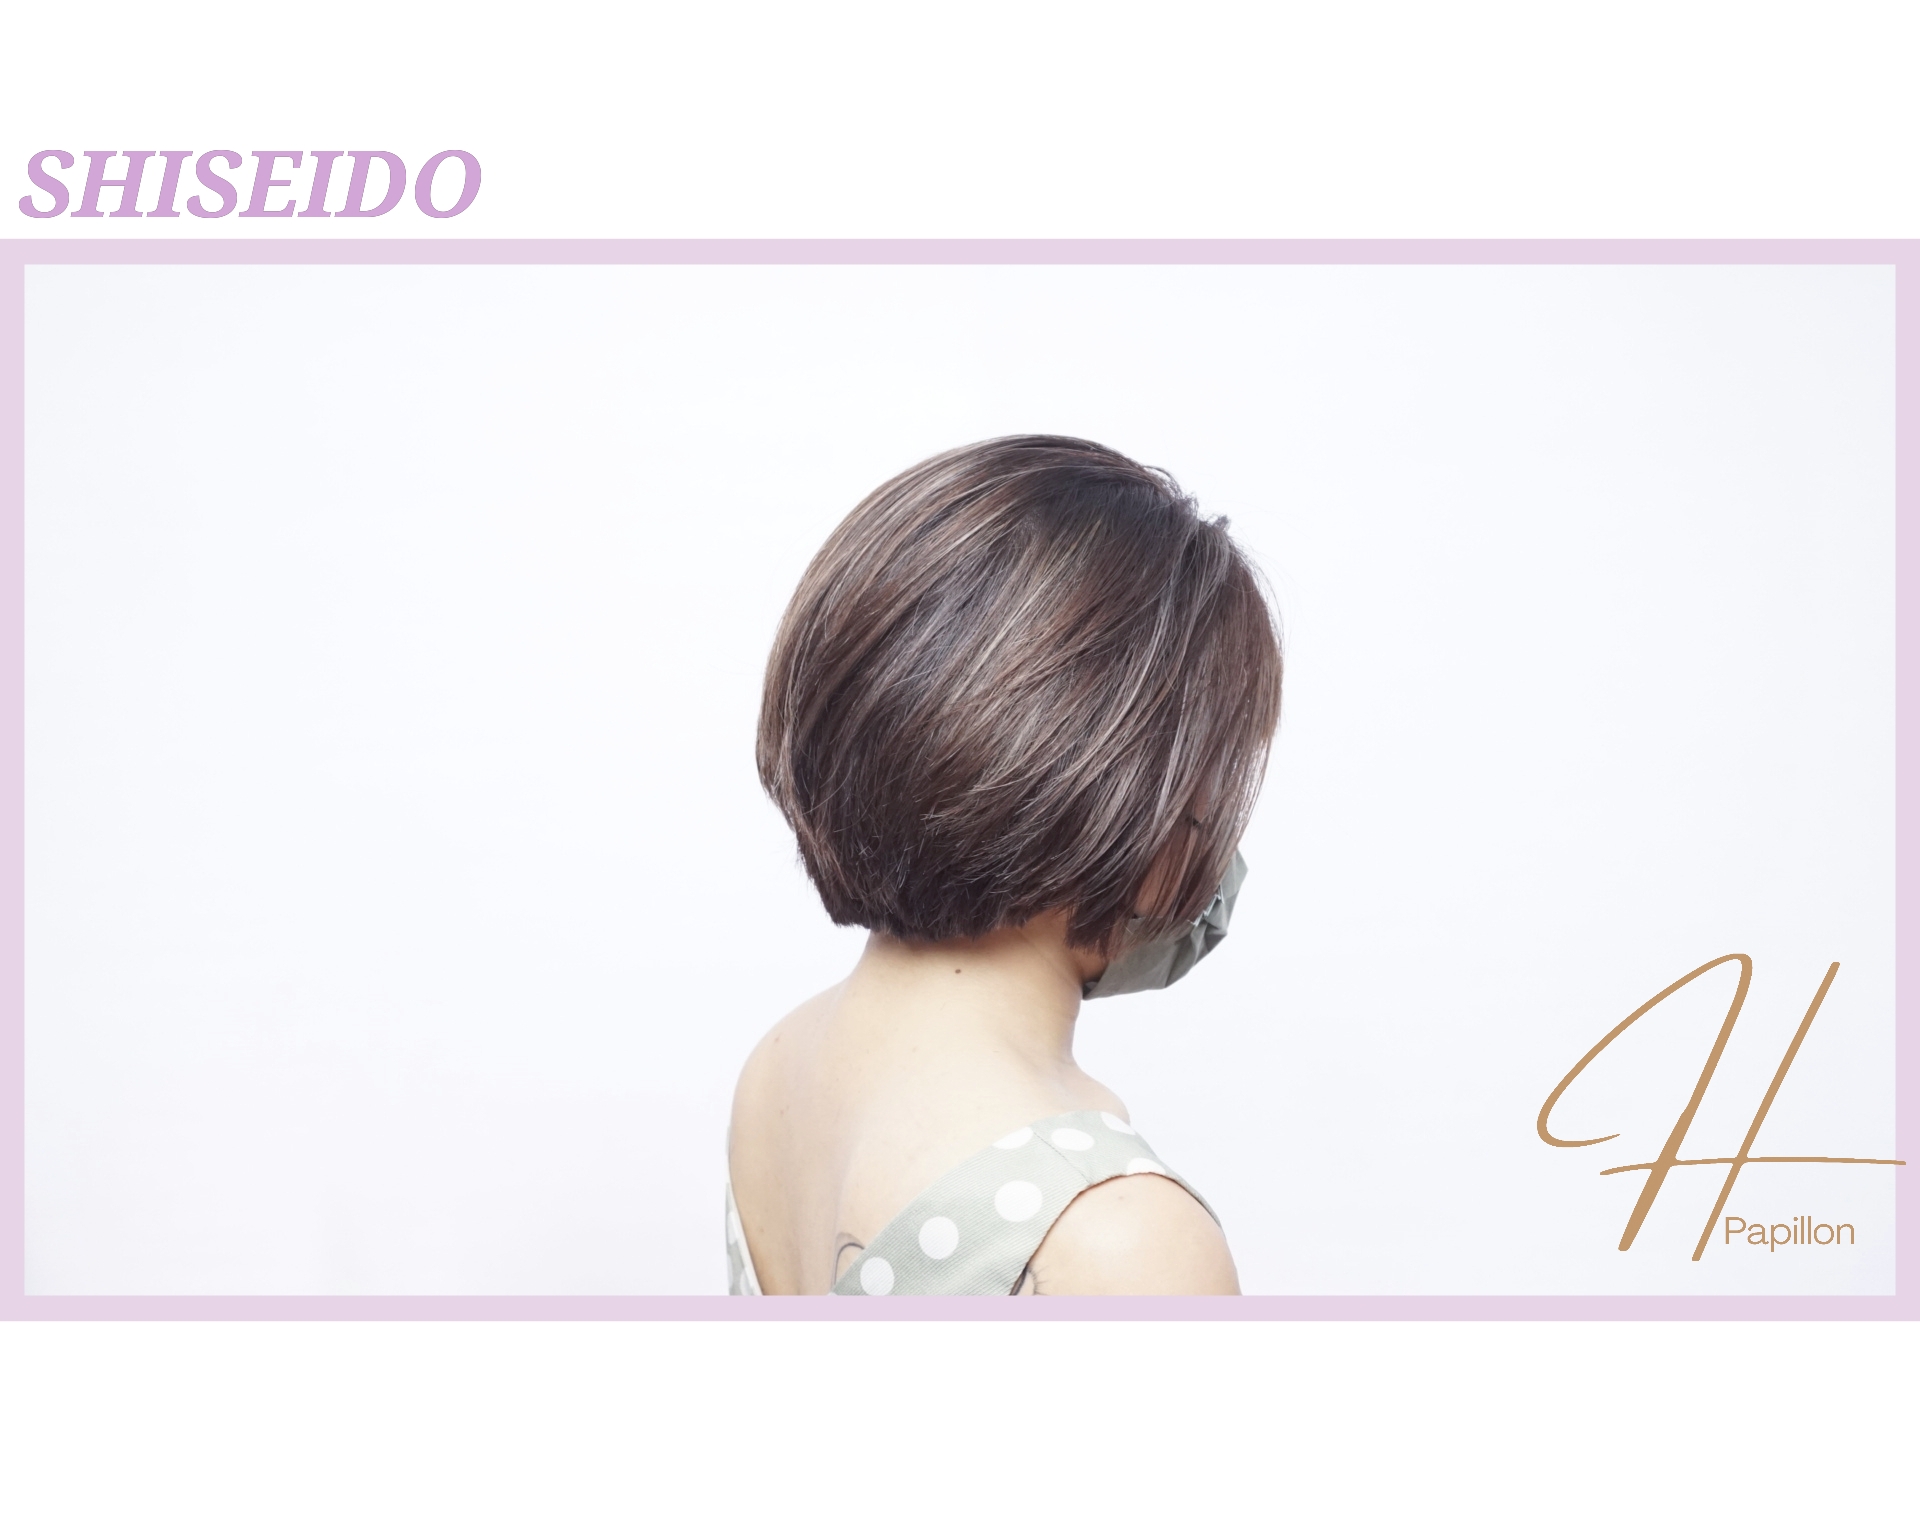 作品參考 / 最新消息:shiseido primience